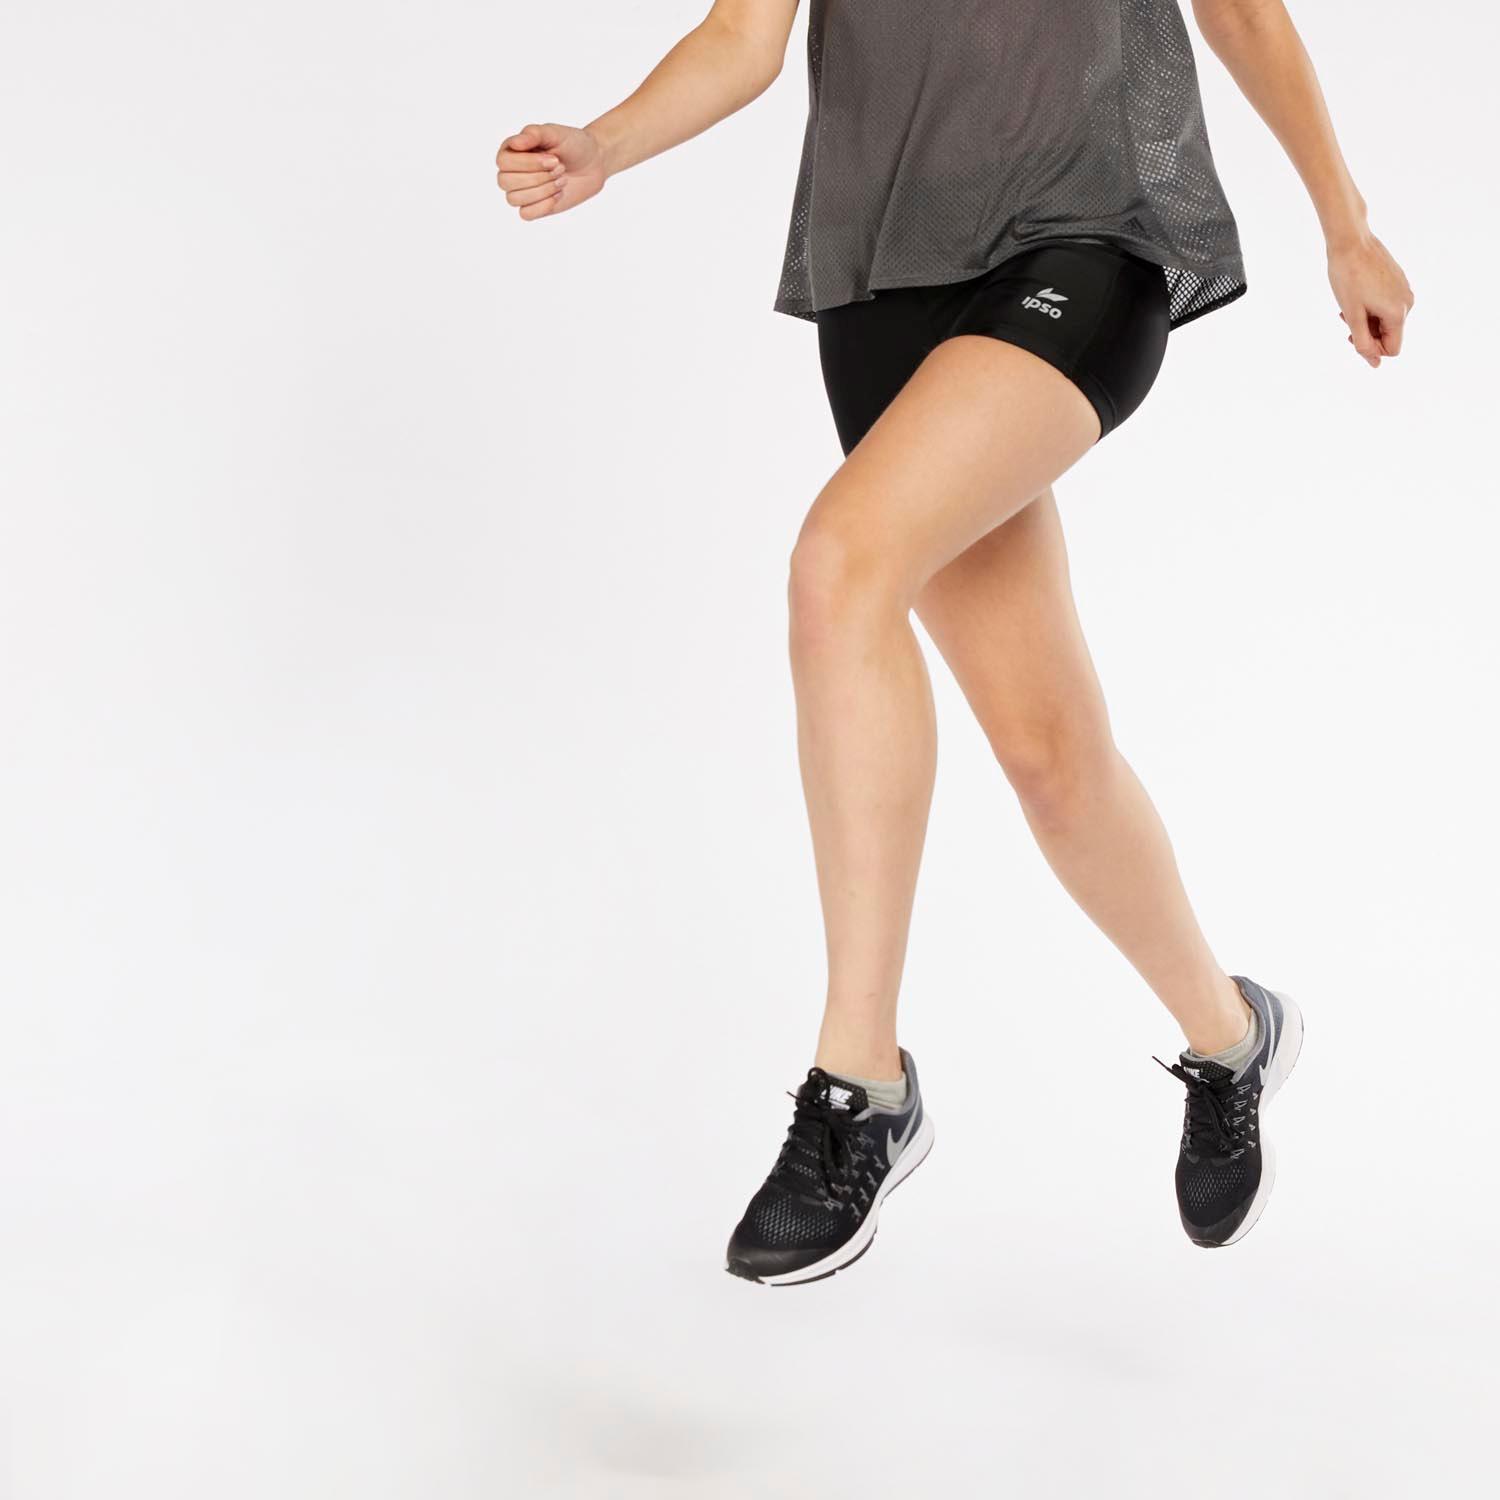 Corsaires Running Ipso Basic - Noir - Collants Femme sports taille L